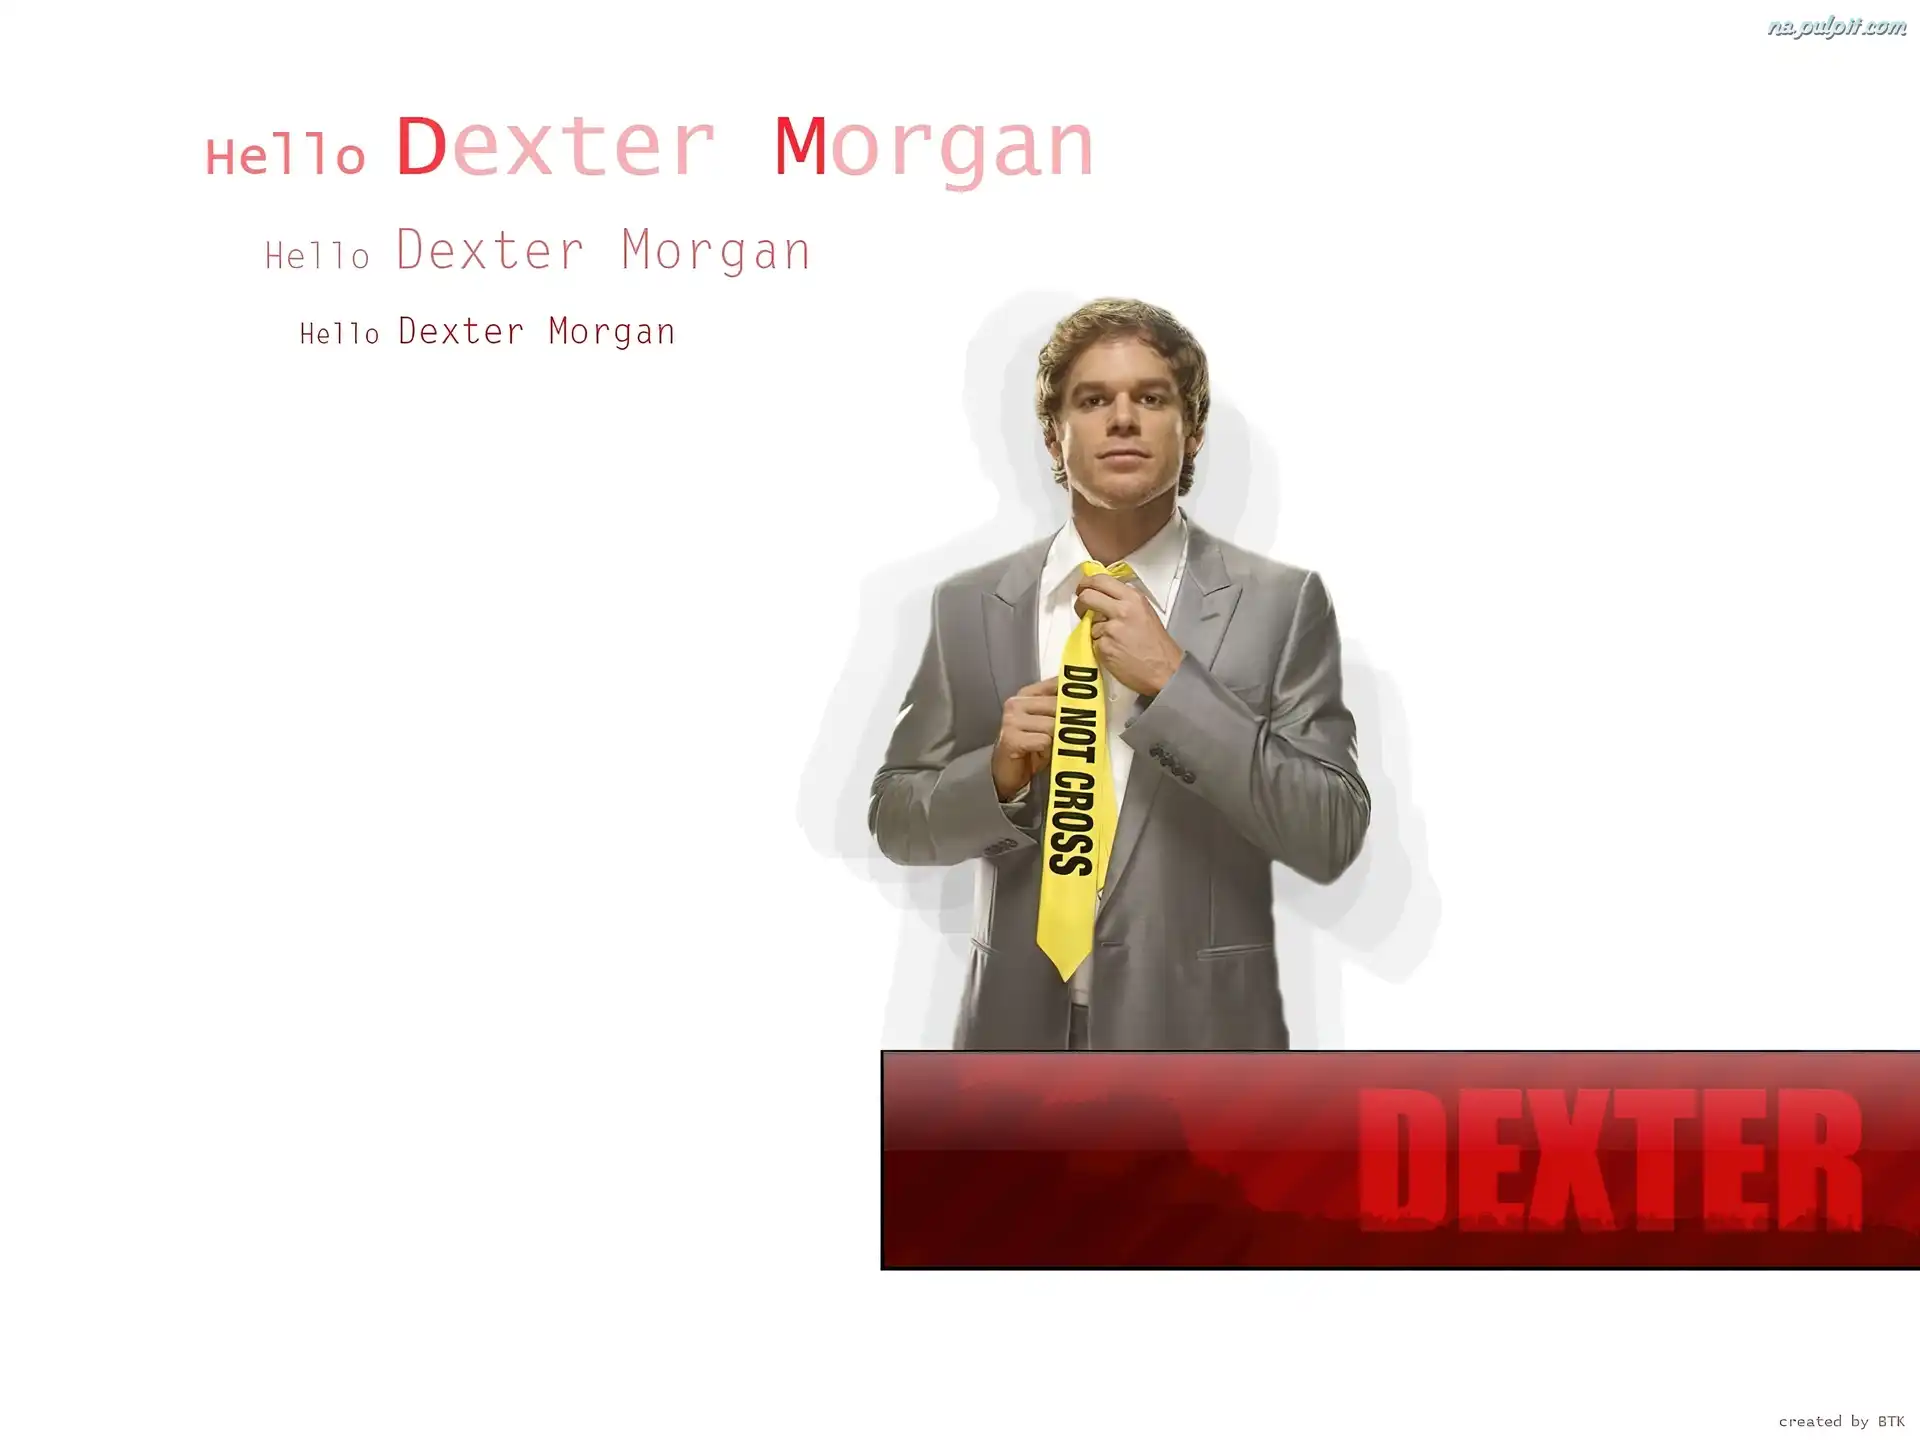 Krawat, Dexter, Michael C. Hall